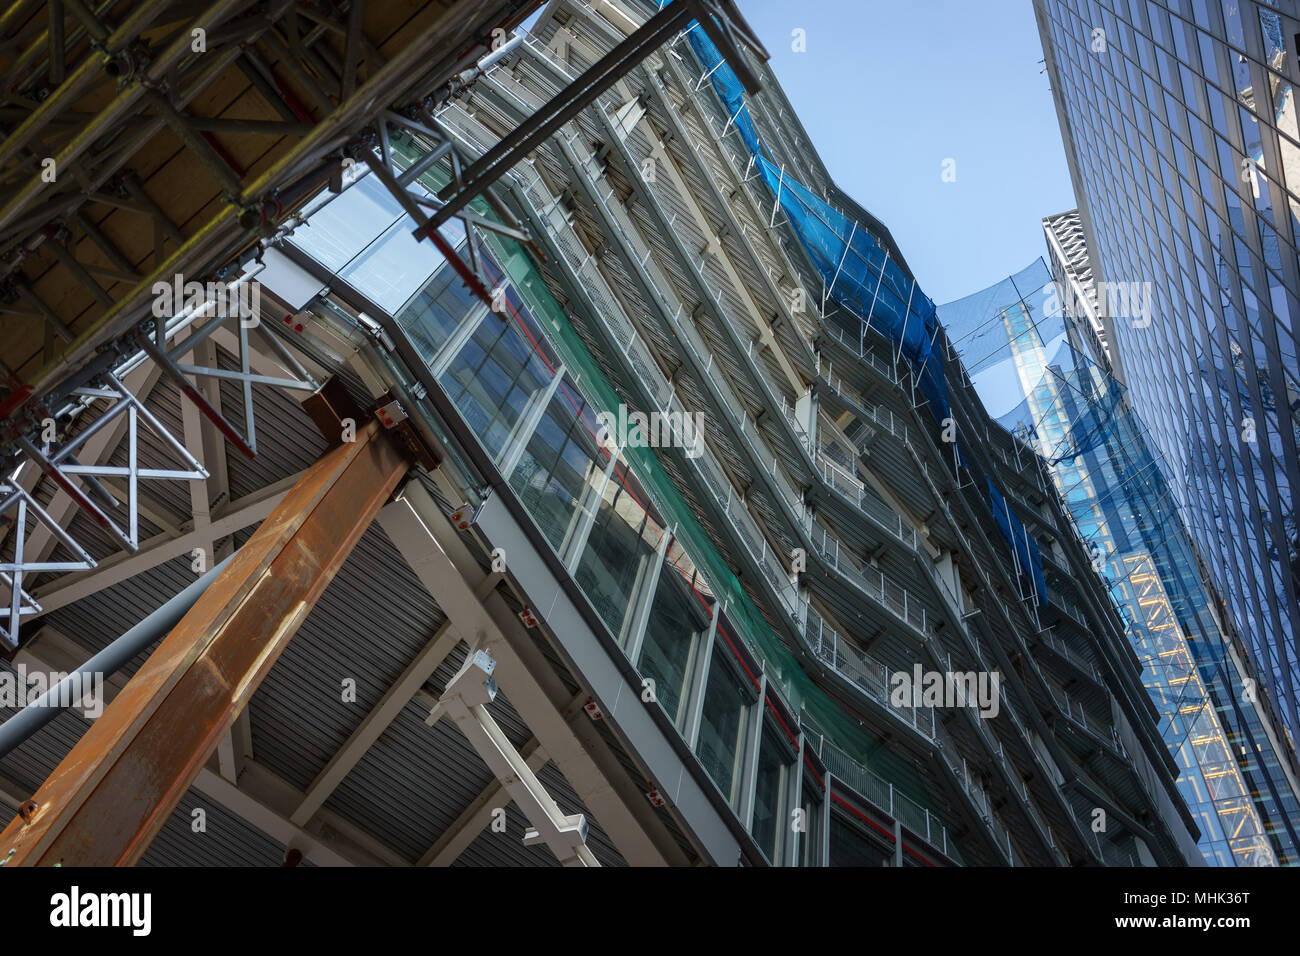 London (UK), September 2017. Skyscraper under construction in the City. Landscape format. Stock Photo